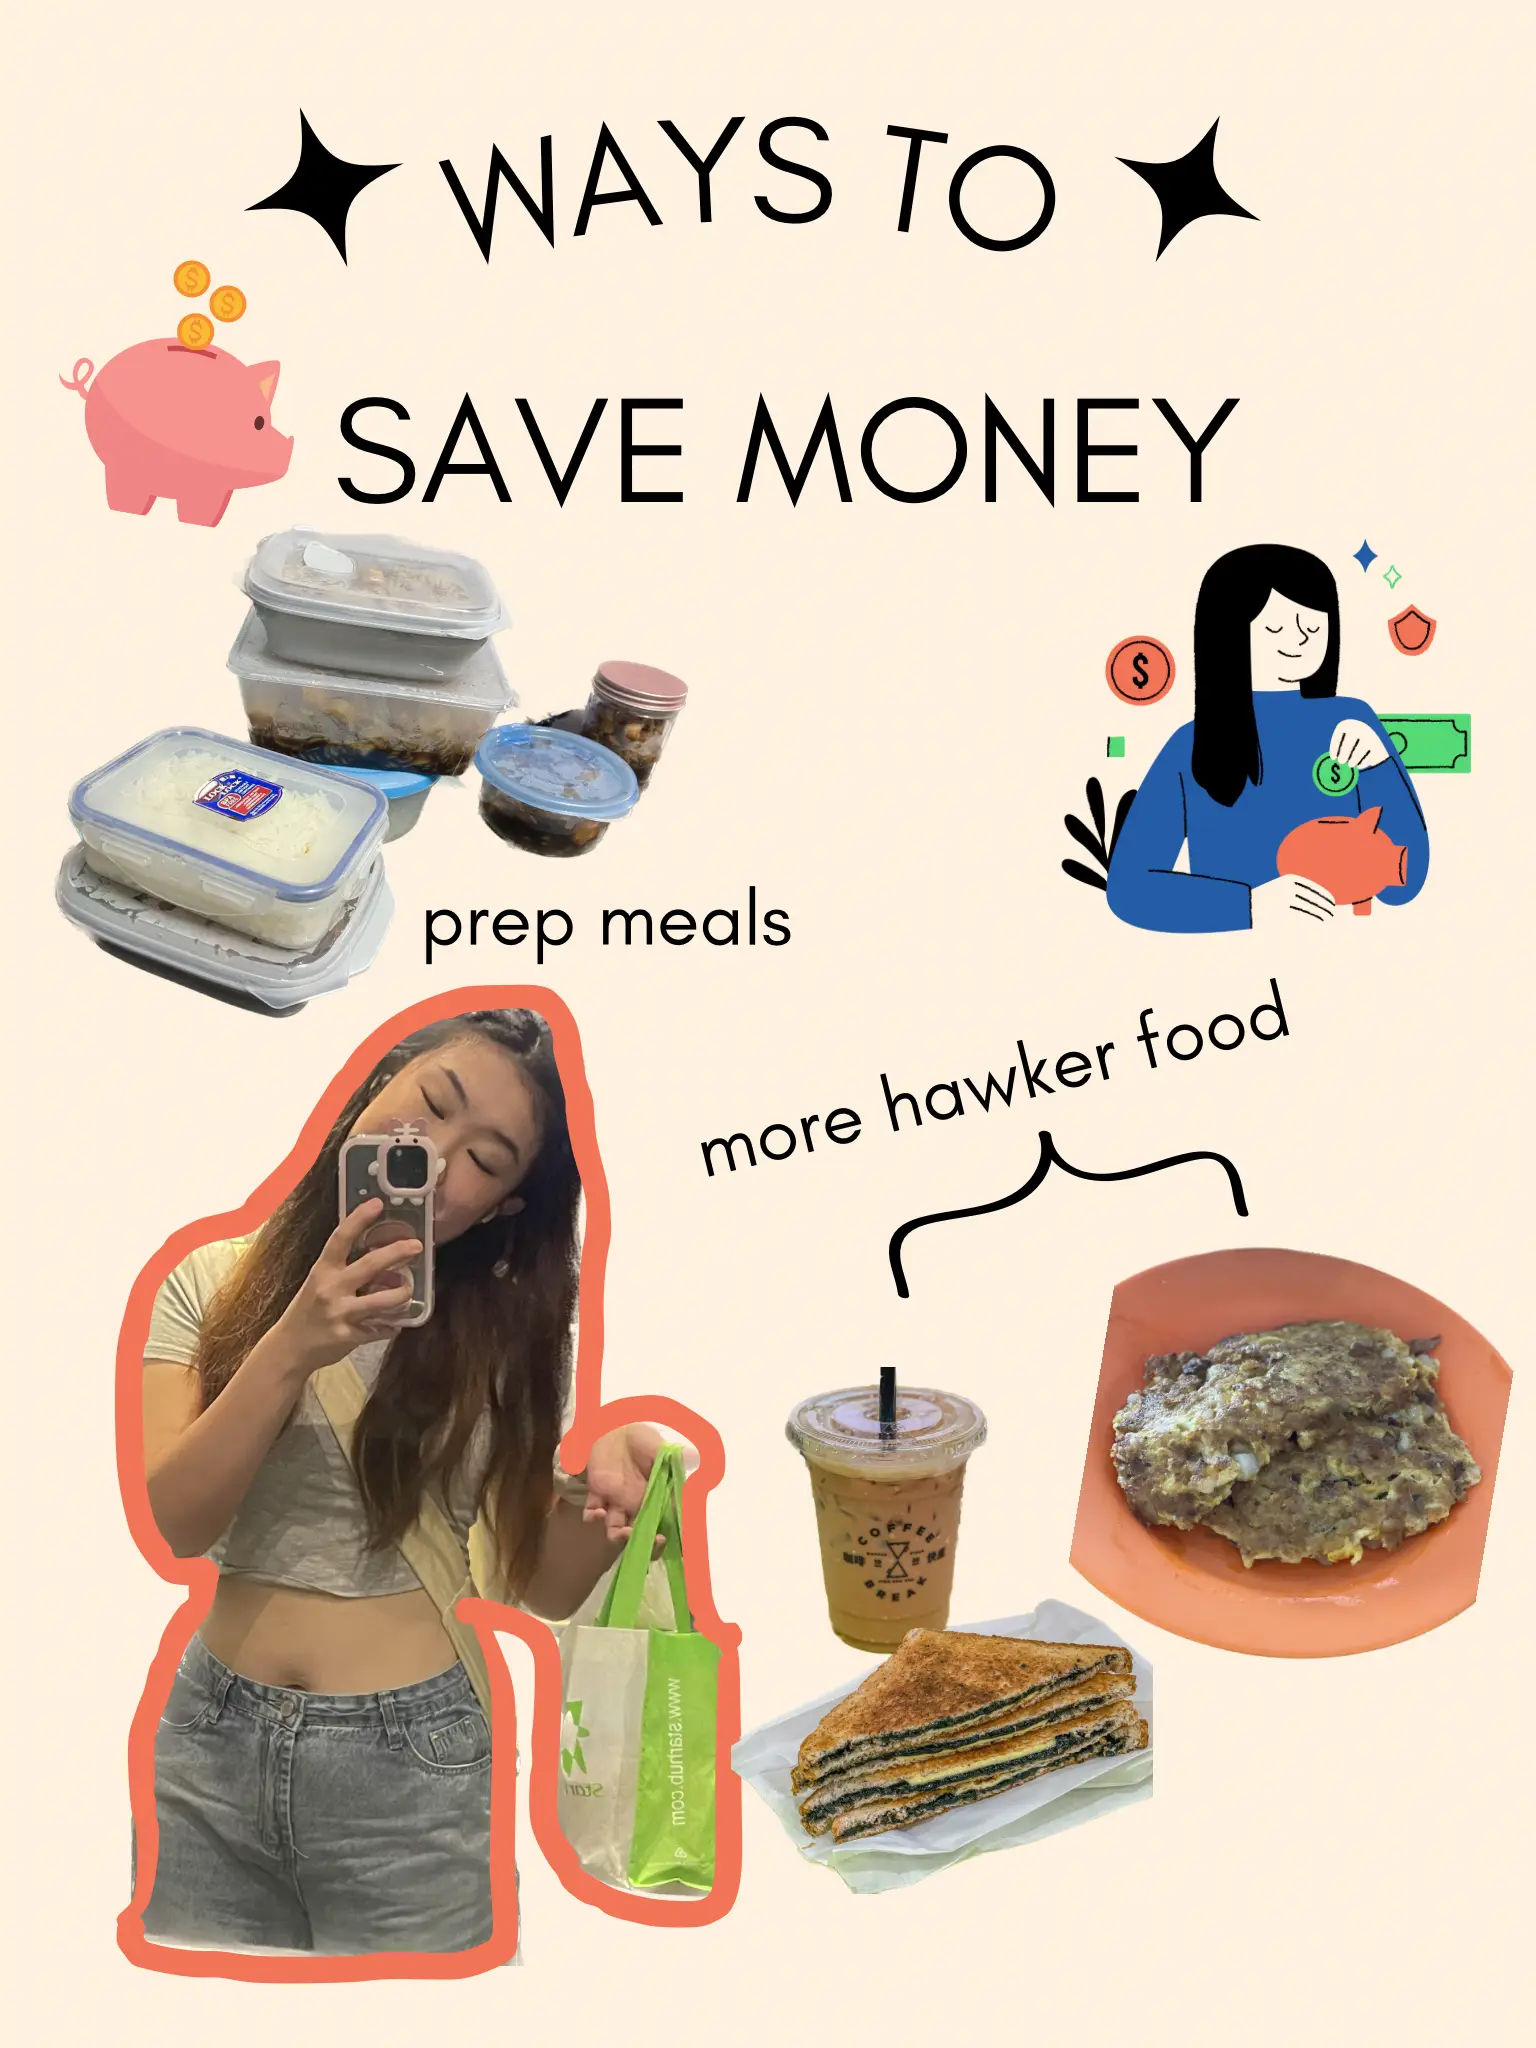 Money-saving meal alternatives